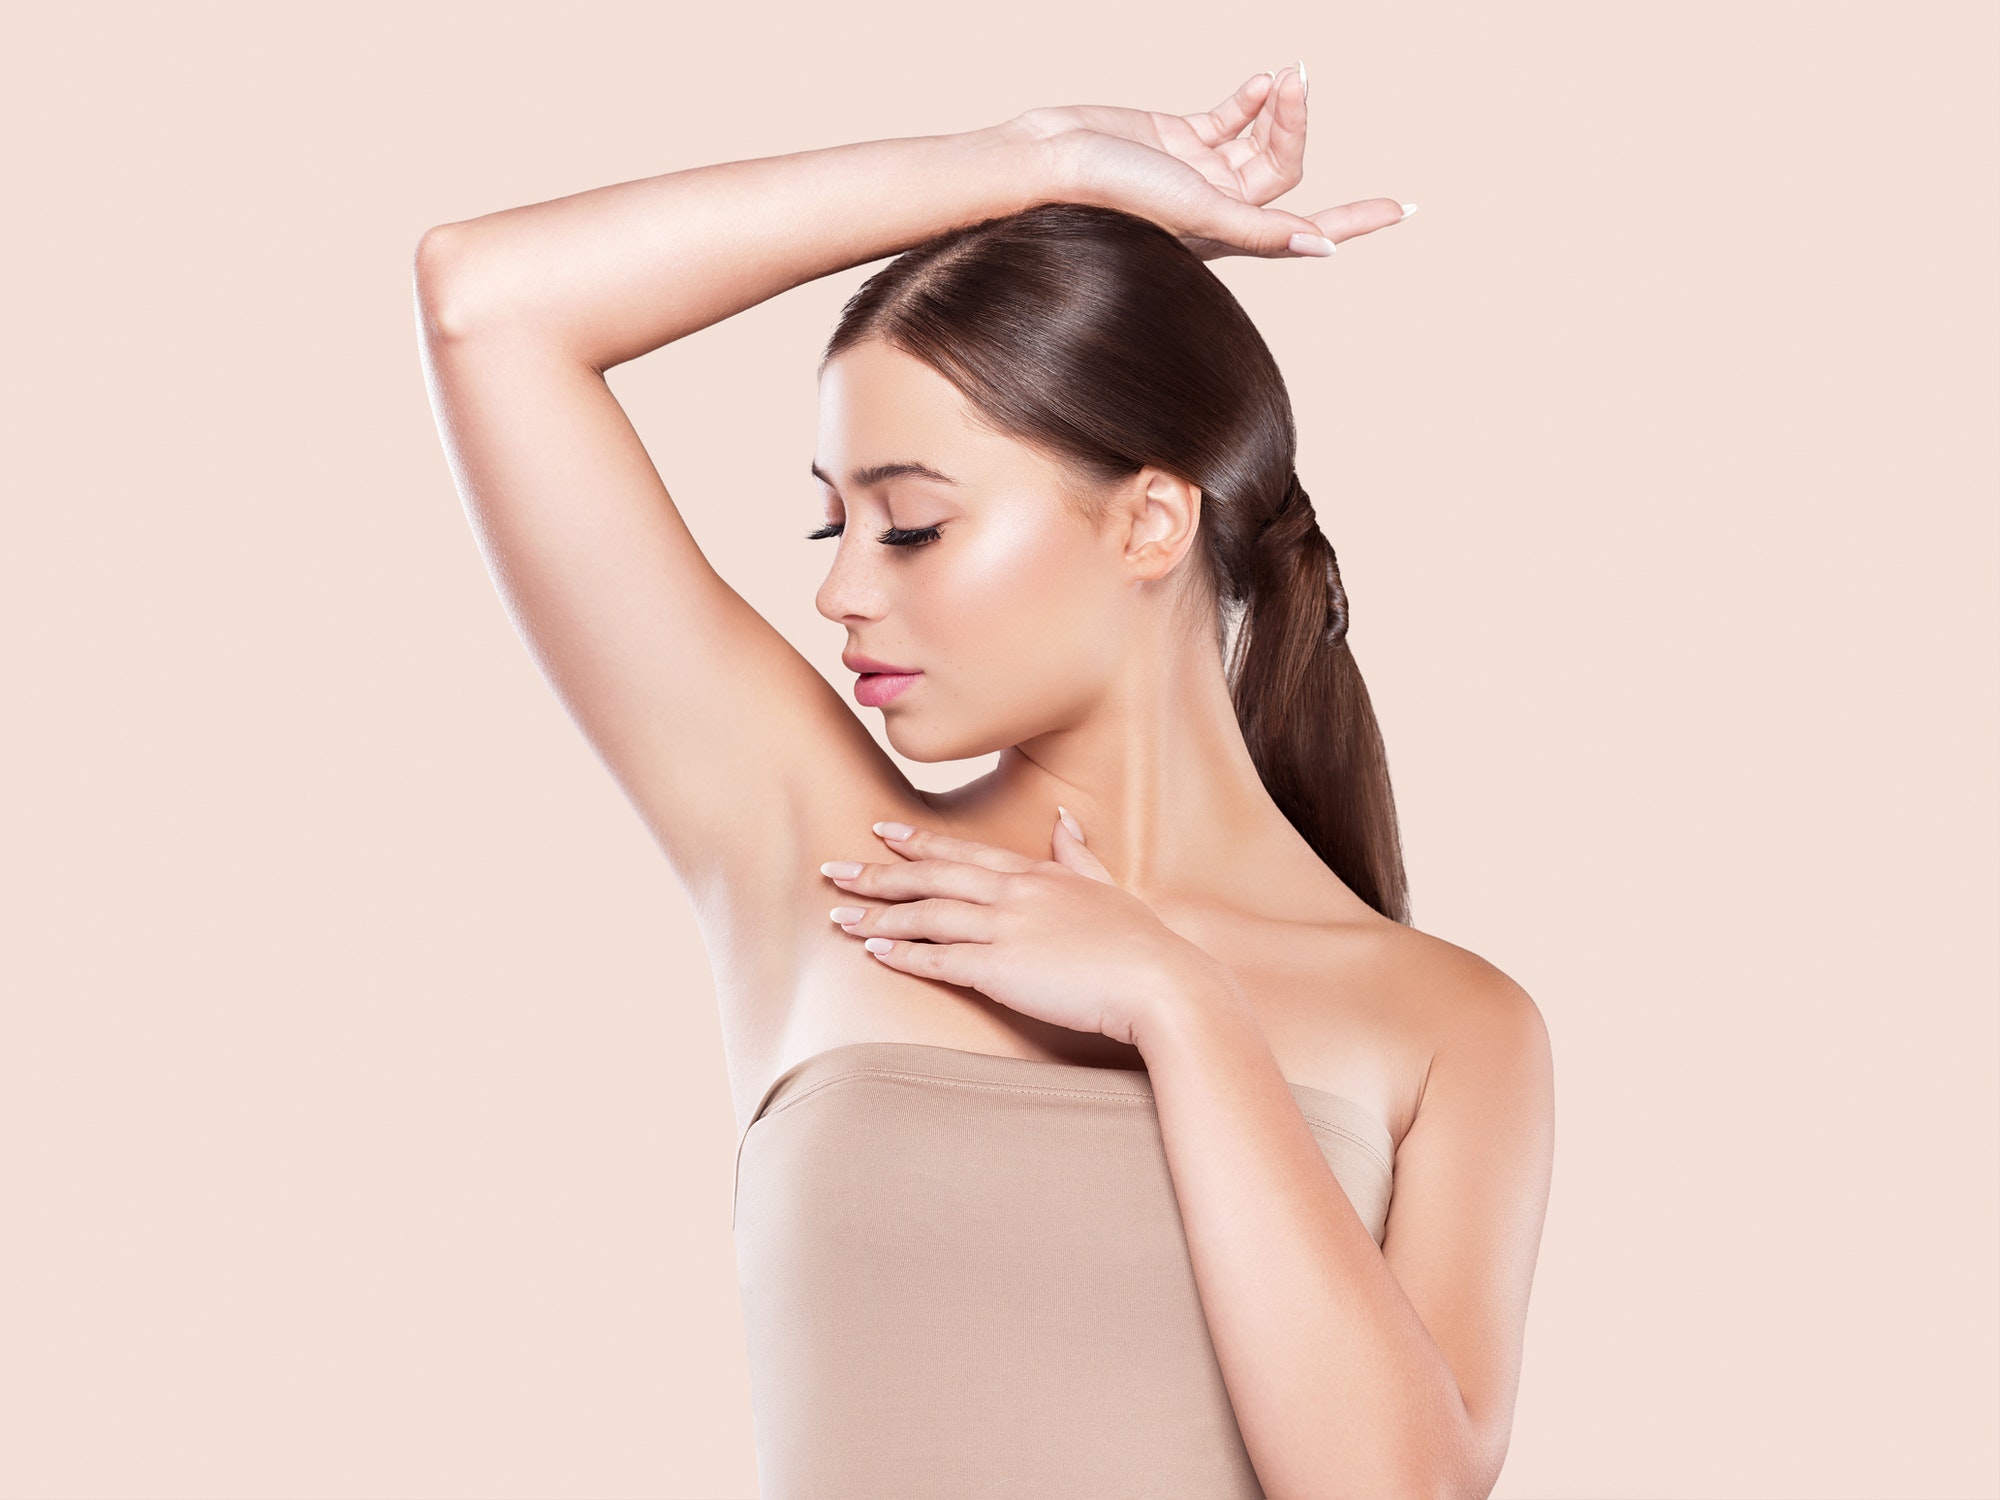 armpit-woman-healthy-skin-depilation-concept-woman-hand-up.jpg